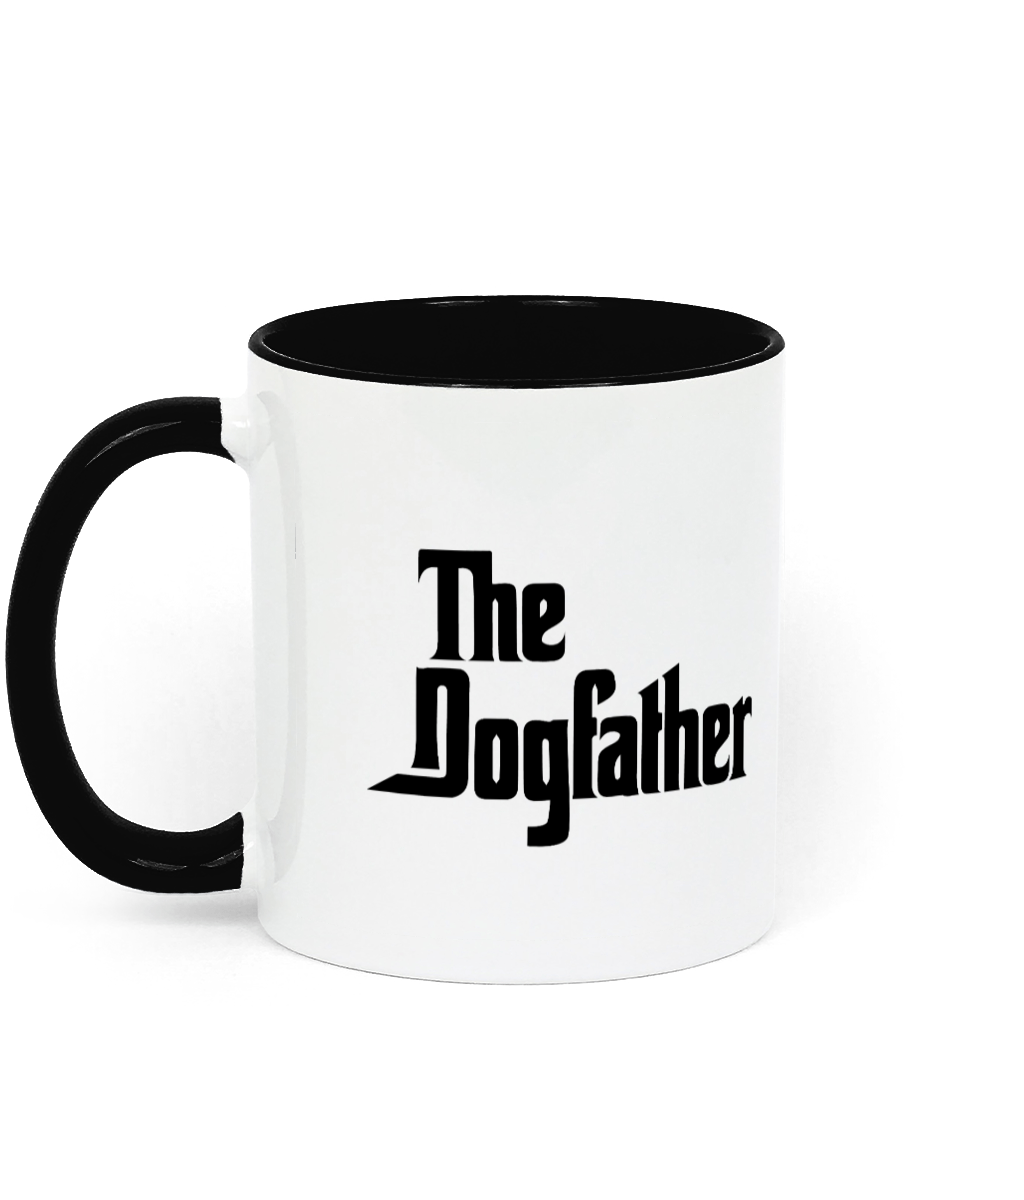 THE DOGFATHER Two Toned Ceramic Mug